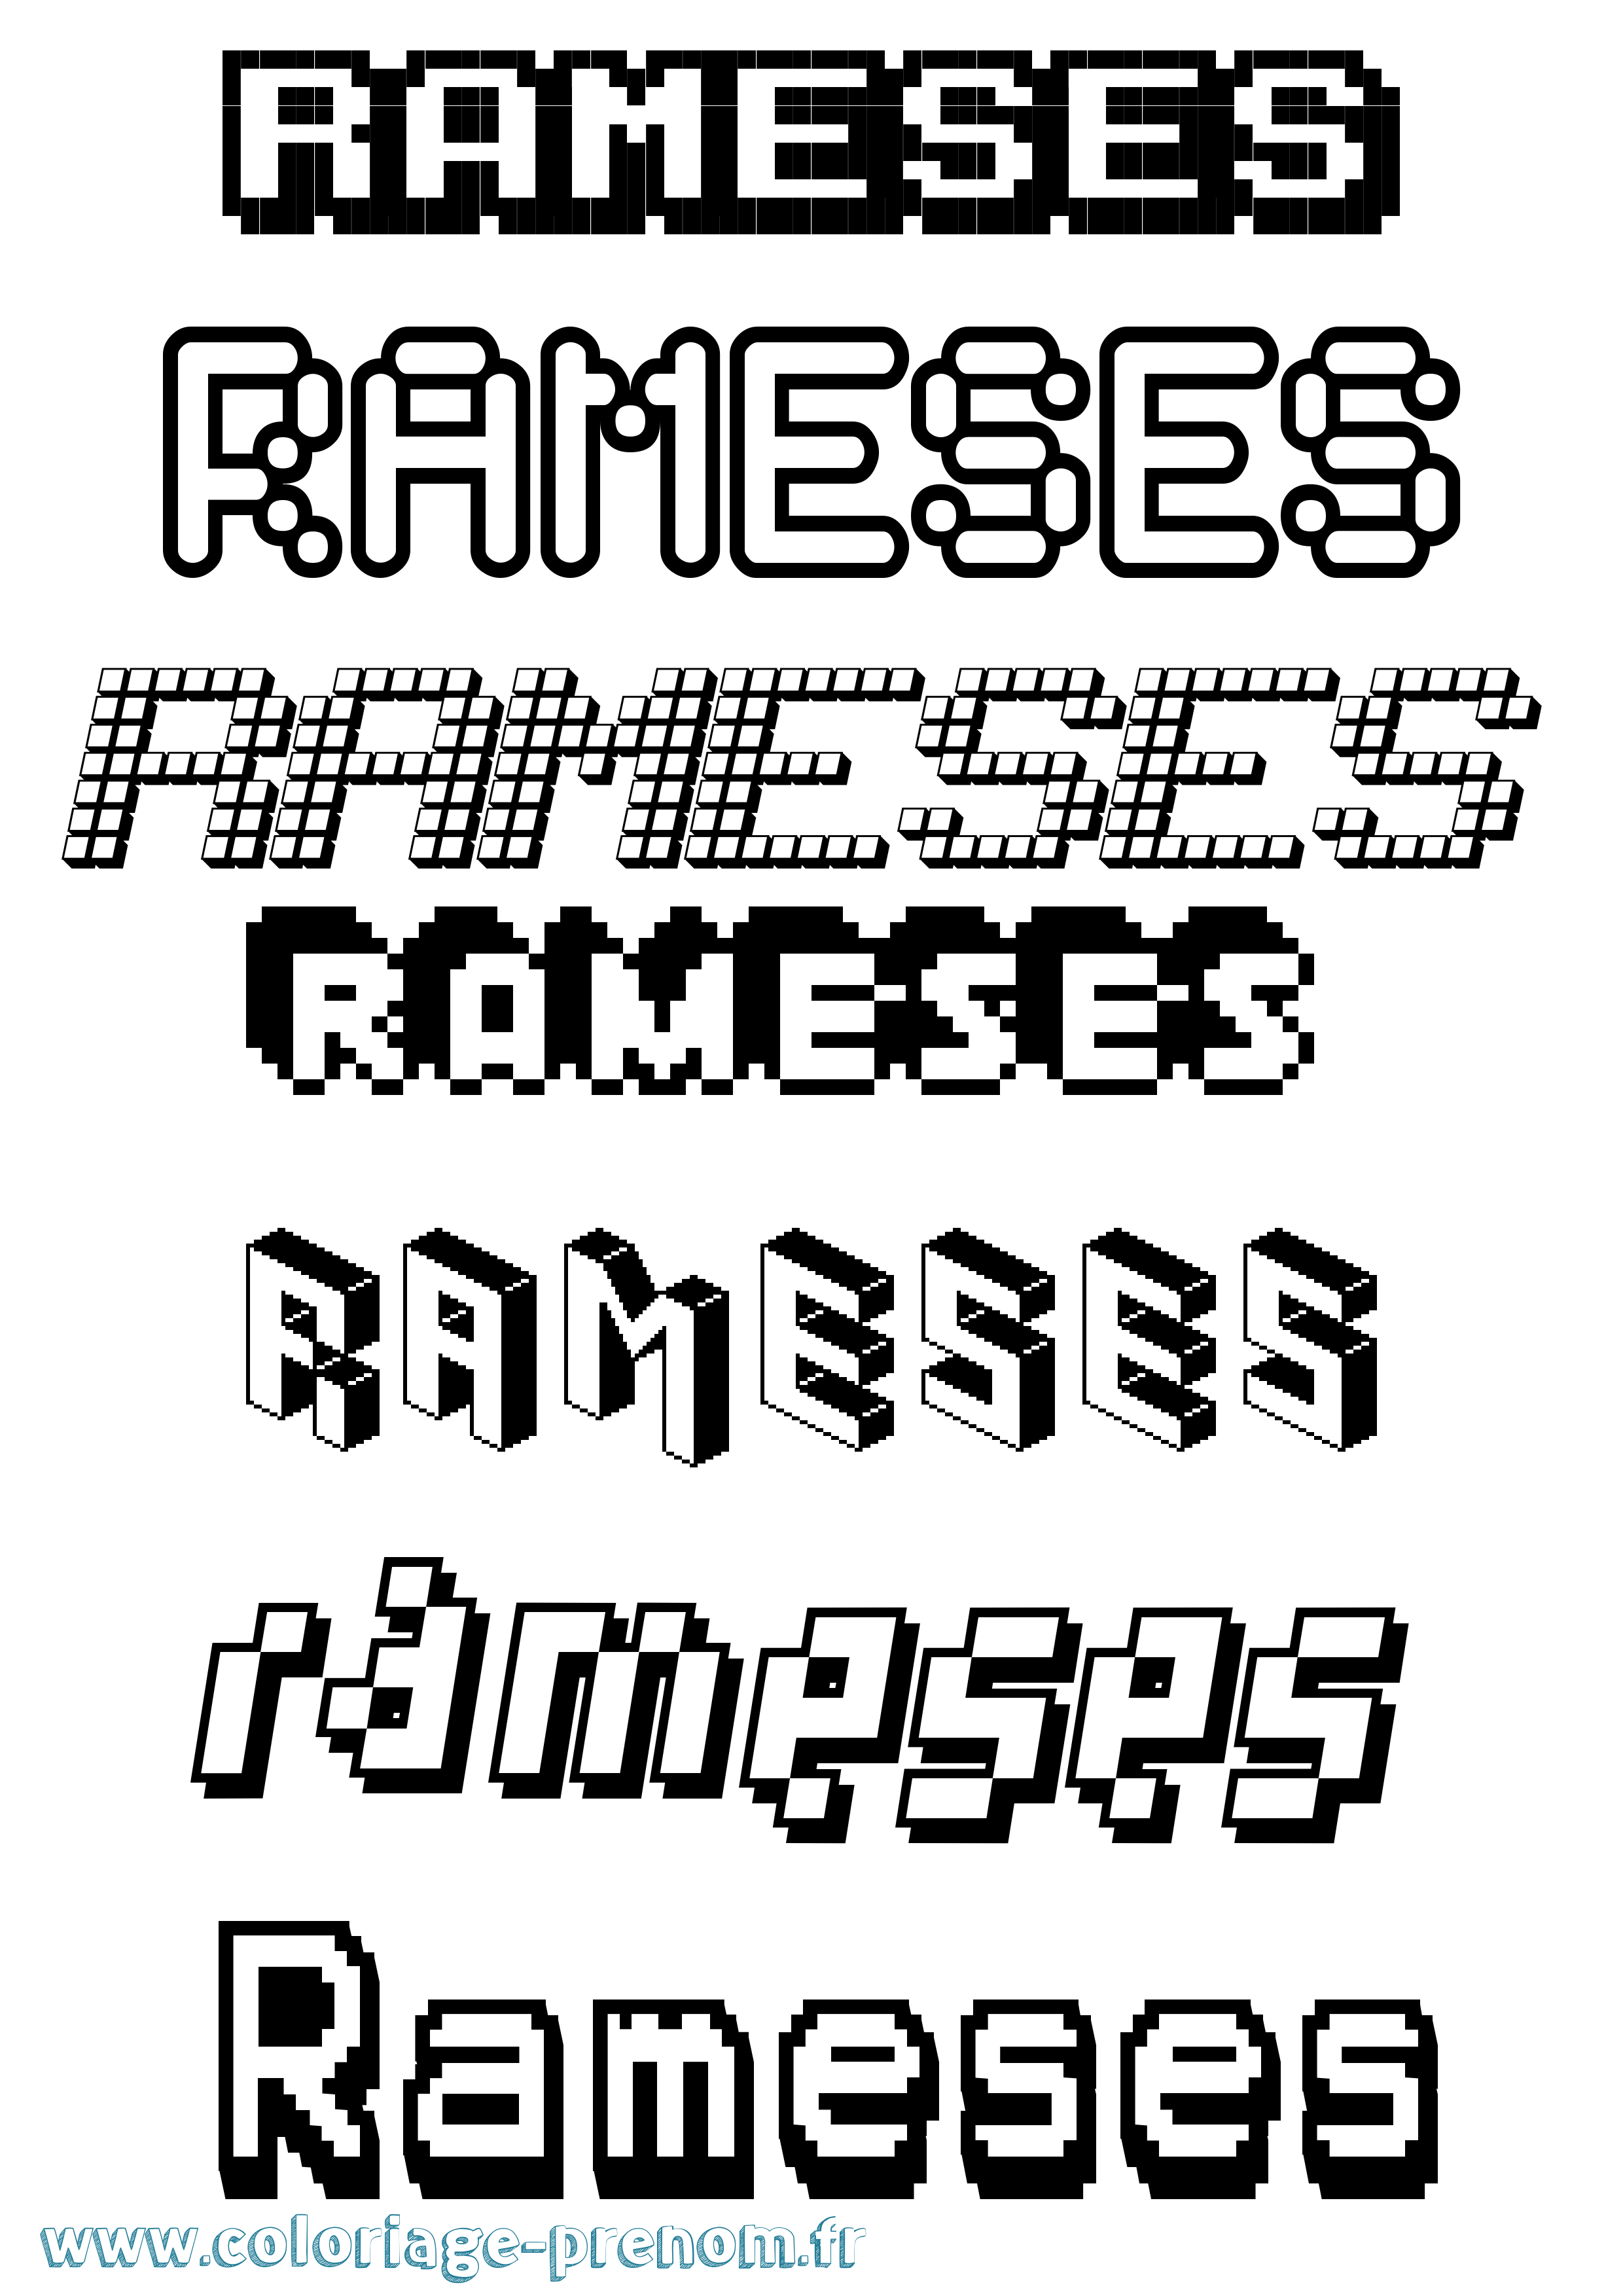 Coloriage prénom Rameses Pixel